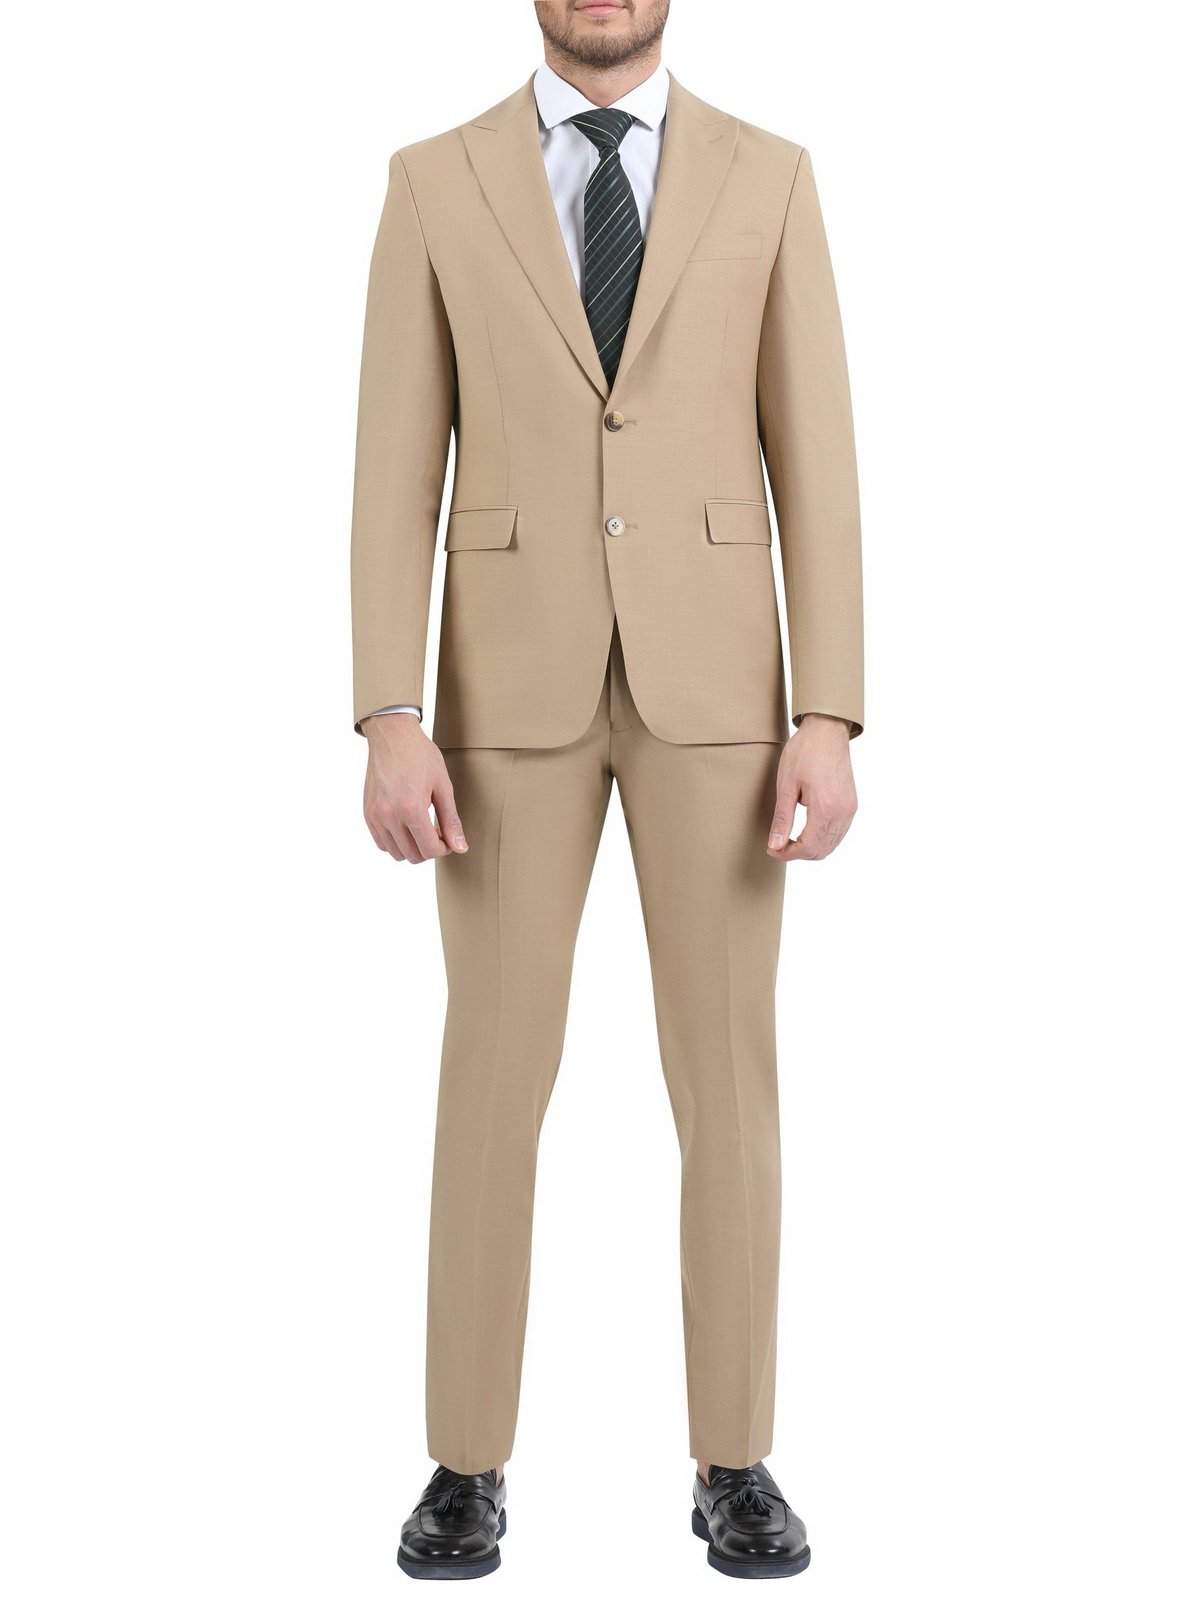 Di'nucci SUITS 38L Di'nucci Solid Tan Peak Lapel Wool Suit